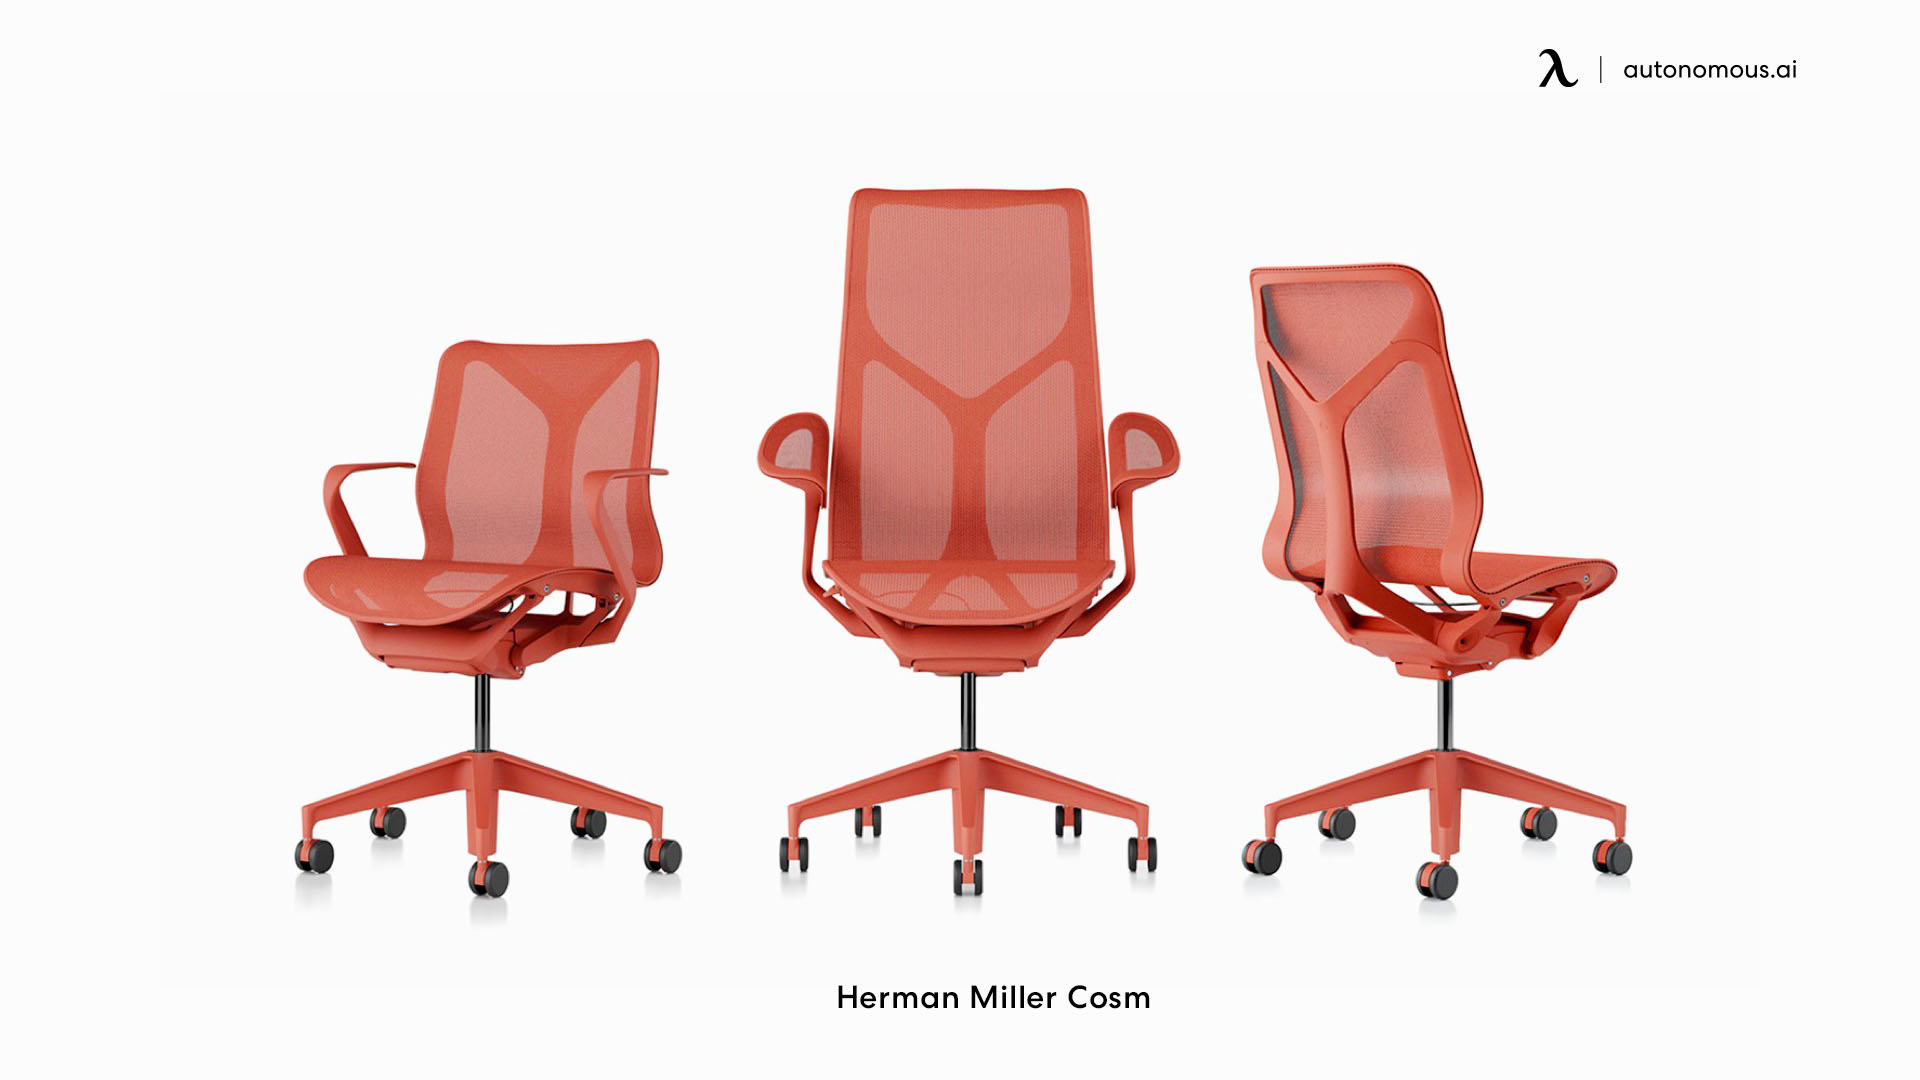 Herman Miller Cosm home office chair